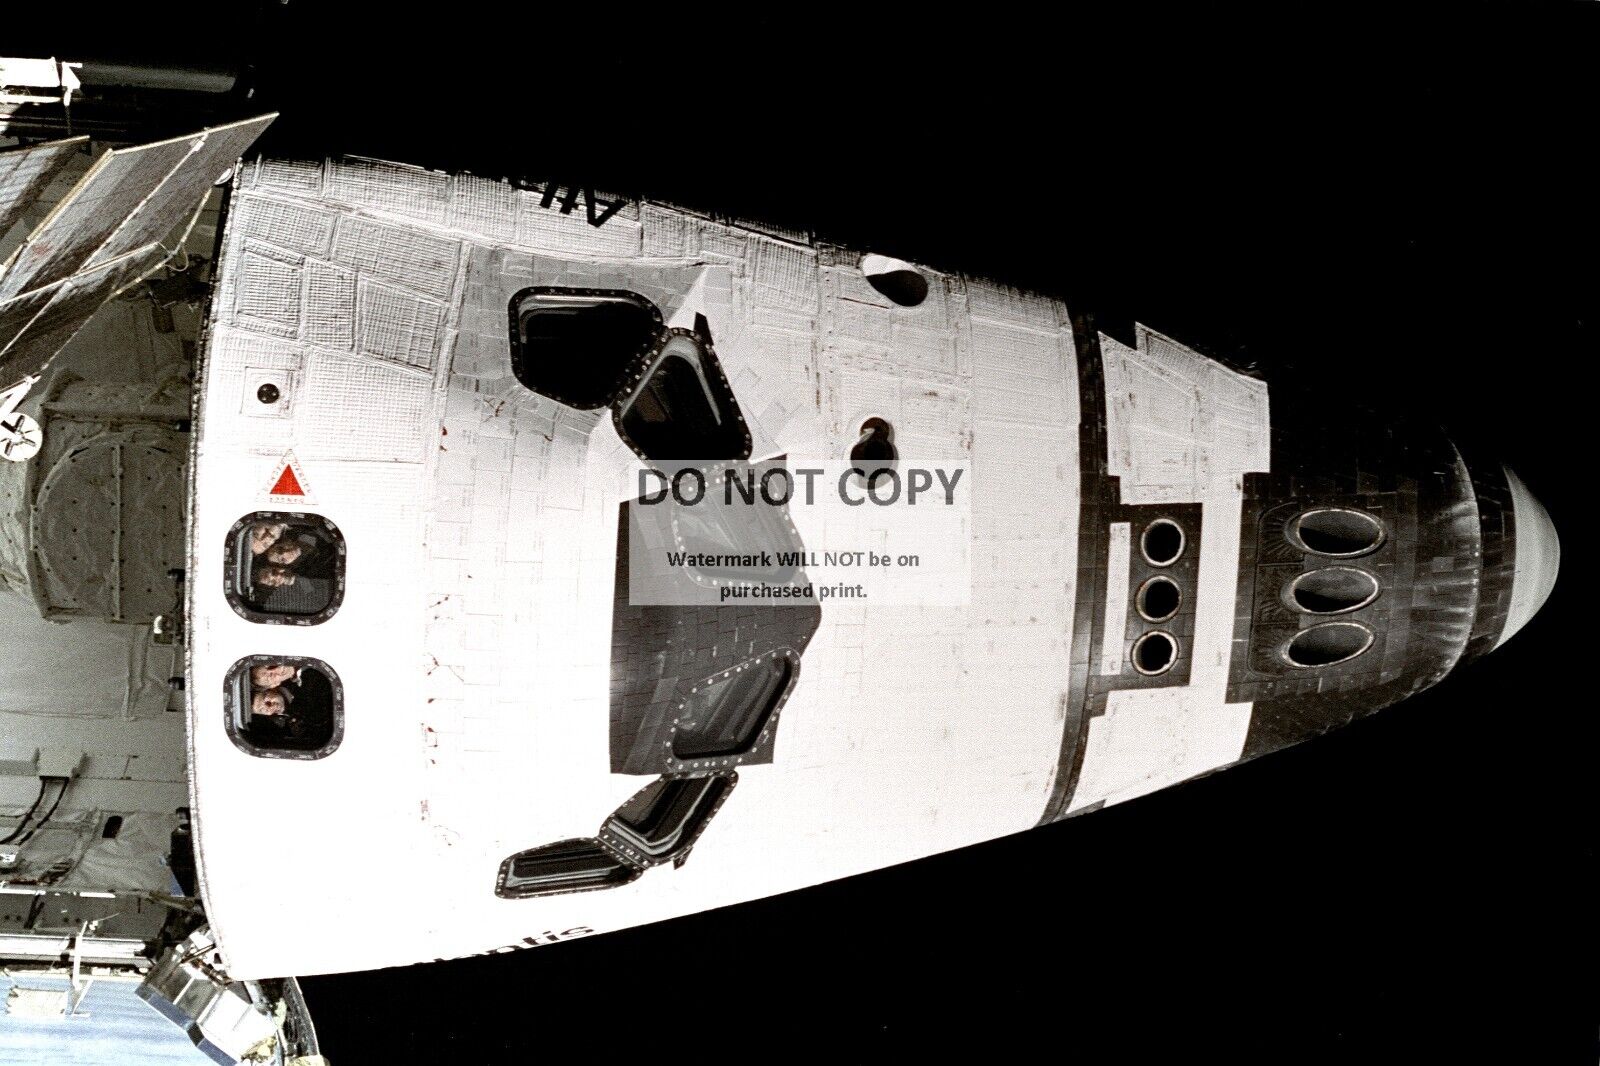 STS-74 ASTRONAUTS ABOARD SHUTTLE ATLANTIS PEER @ MIR - *8X12* NASA PHOTO (MW563)